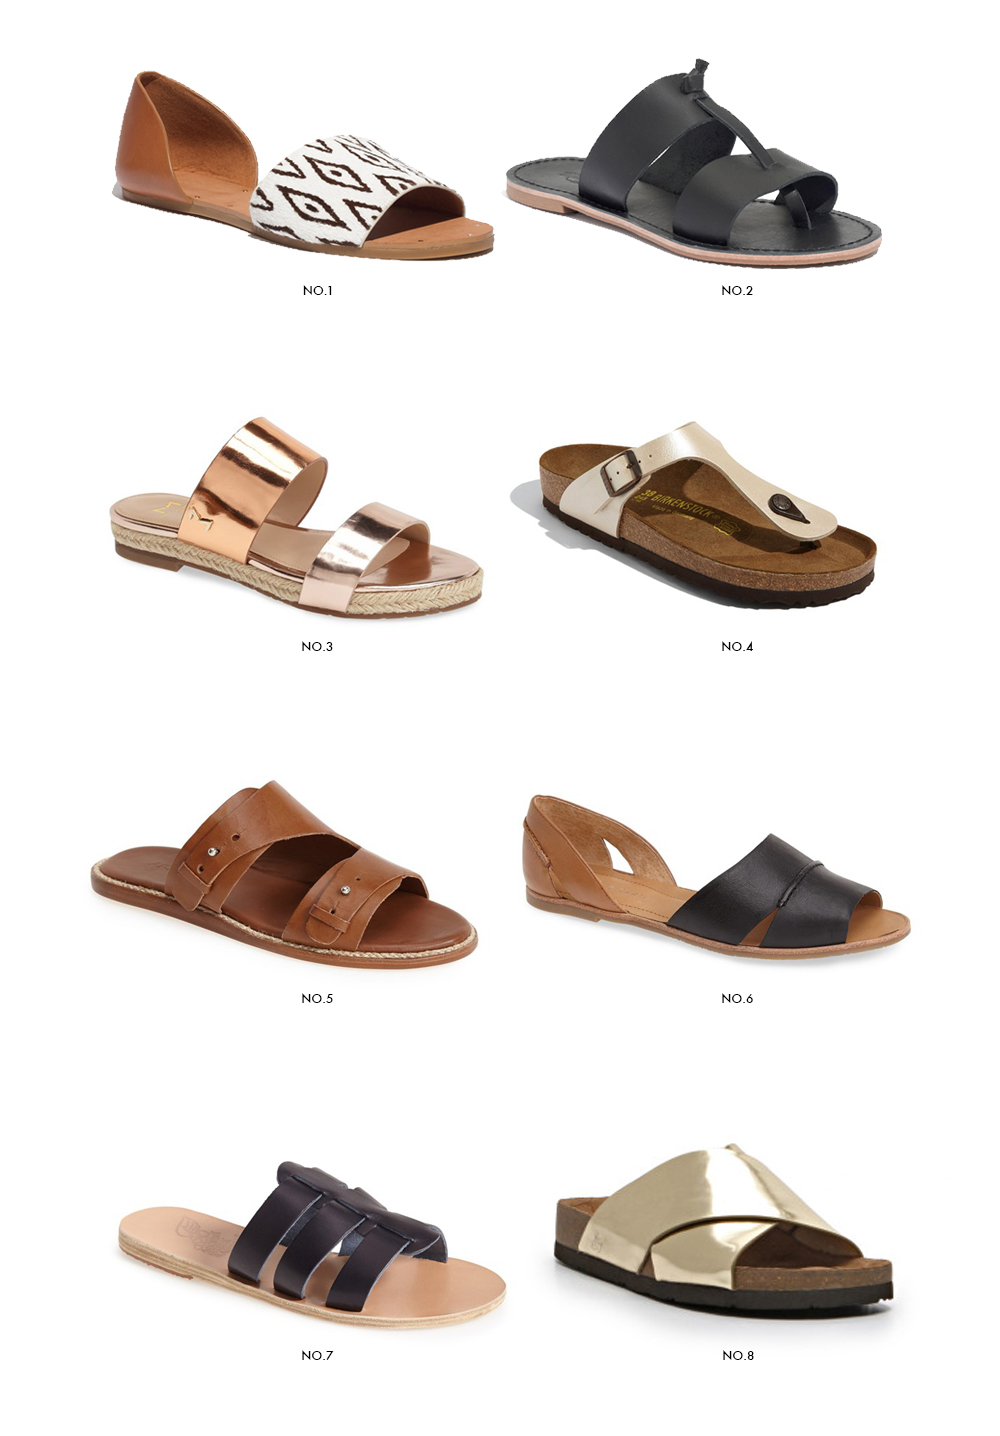 Slip-on Pool Sandals Trend | KittyCotten.com